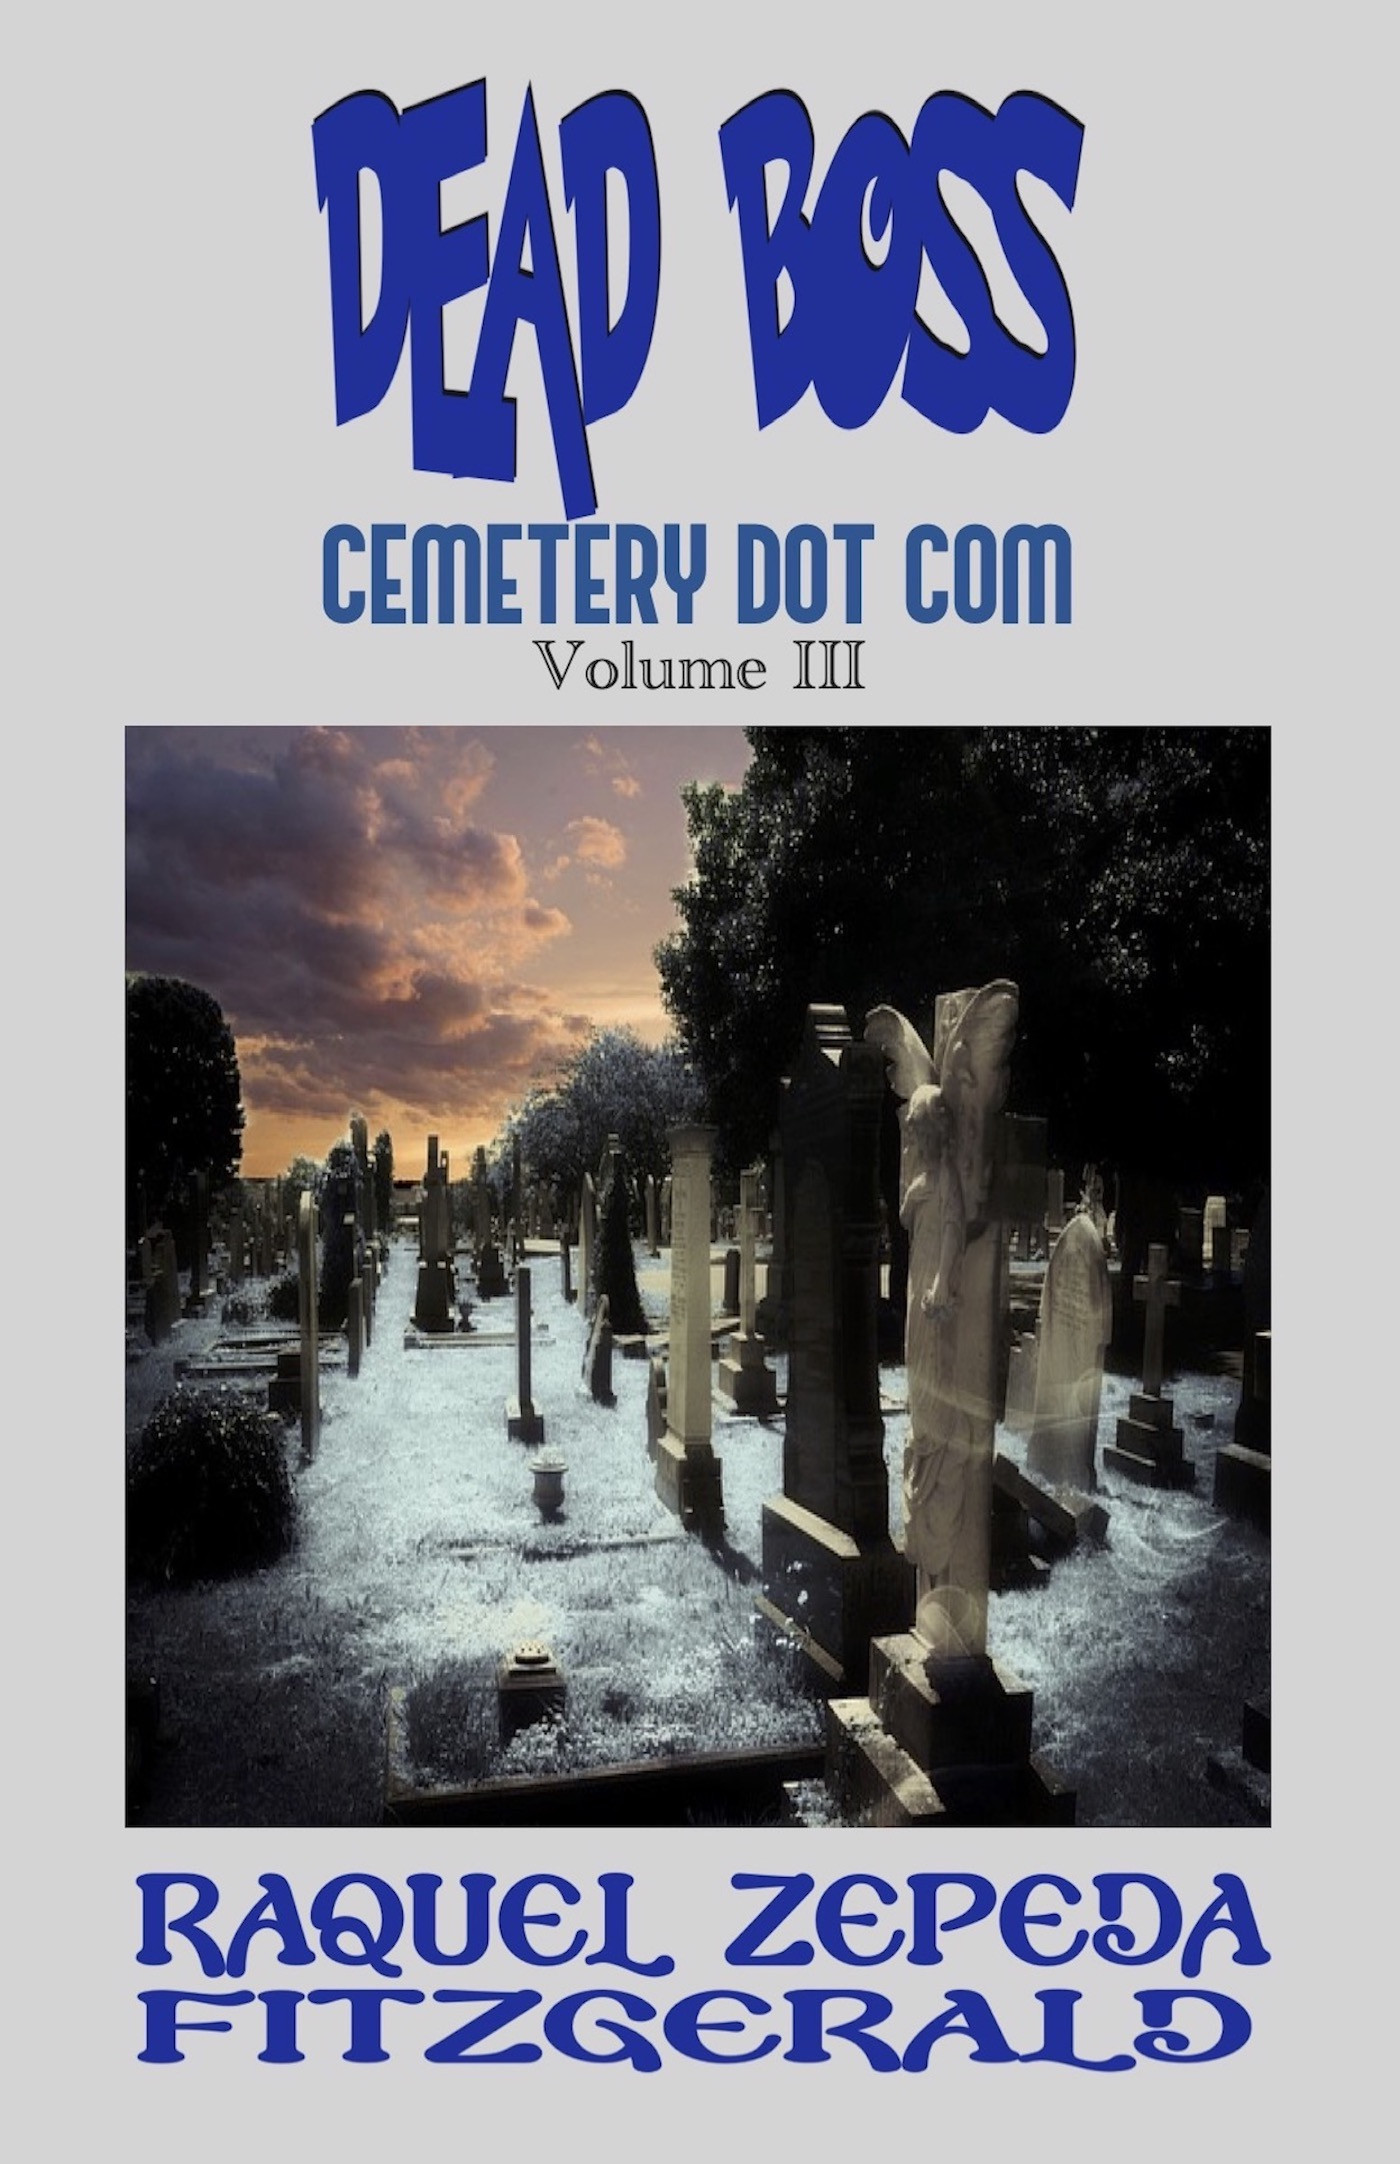 Dead Boss Cemetery Dot Com, Volume III